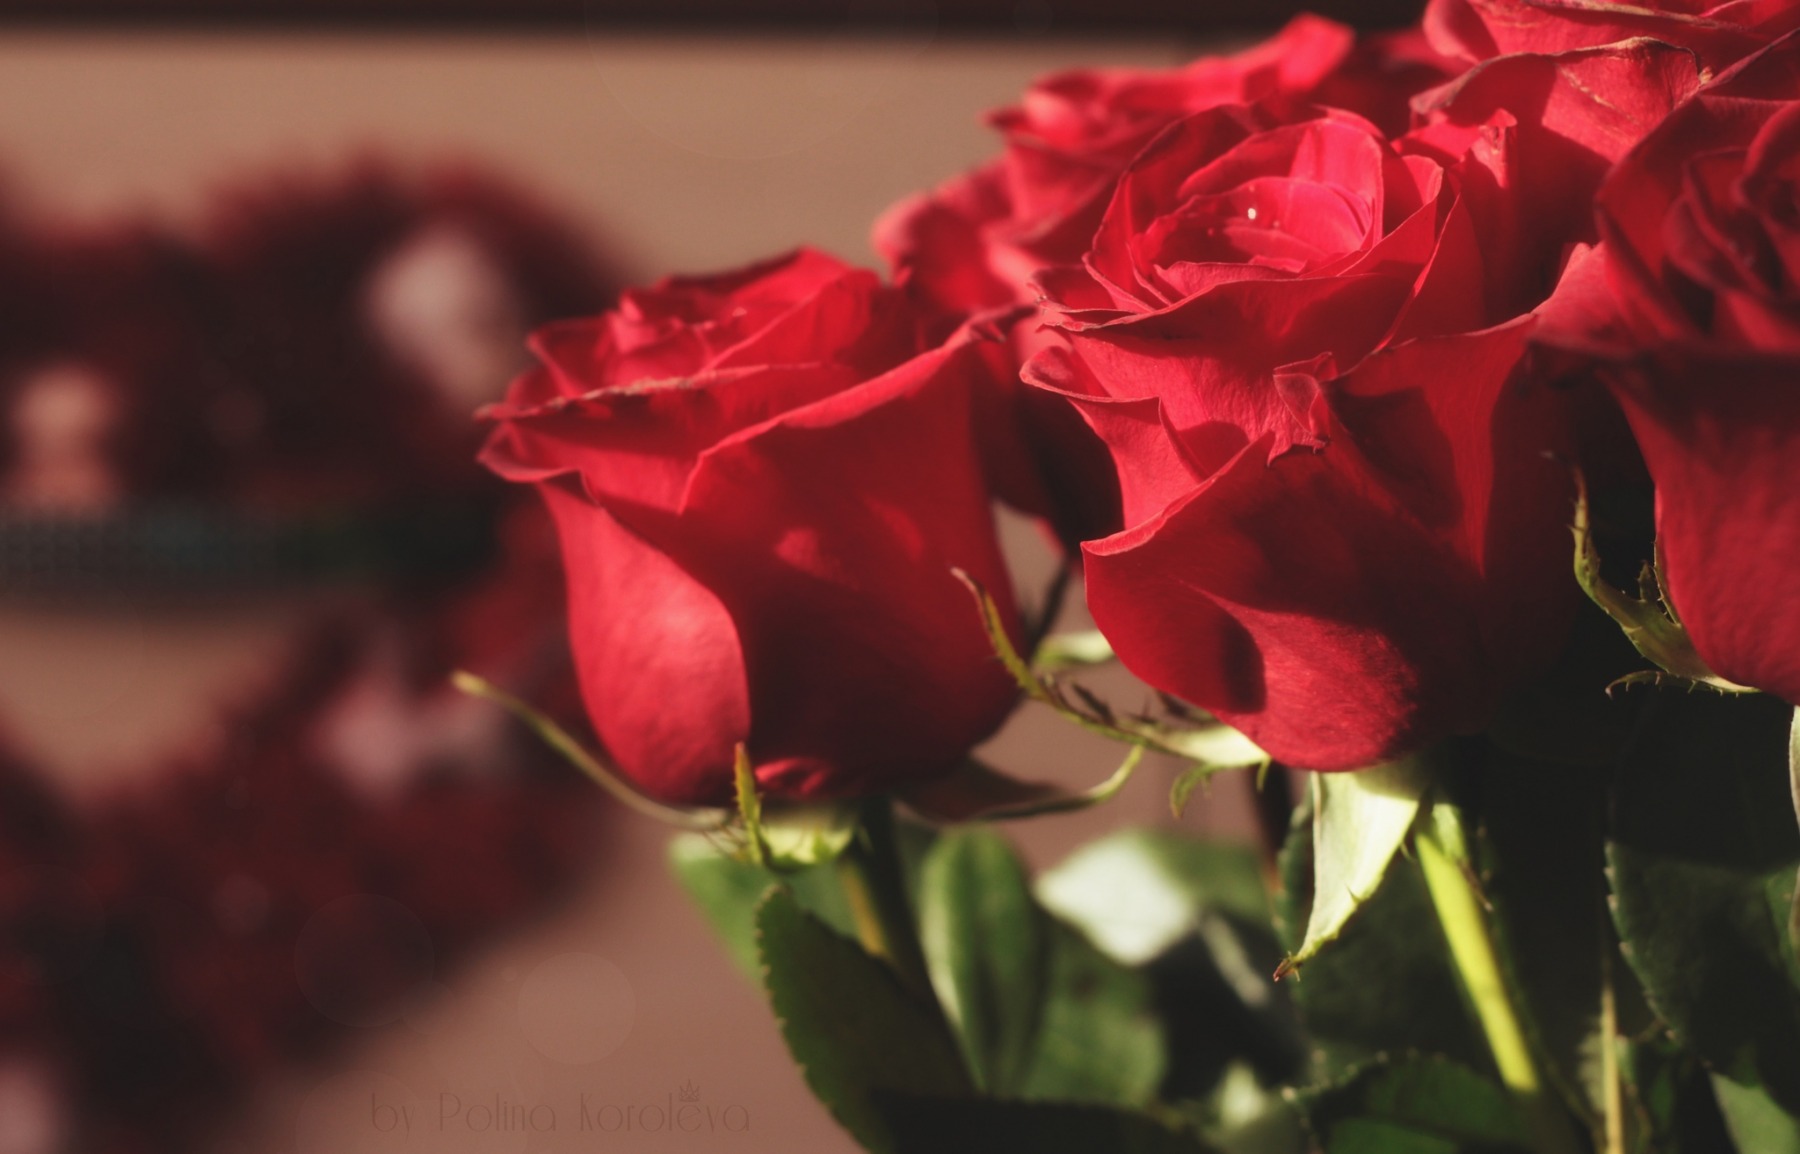 Розы | Фотограф Polina Koroleva | foto.by фото.бай